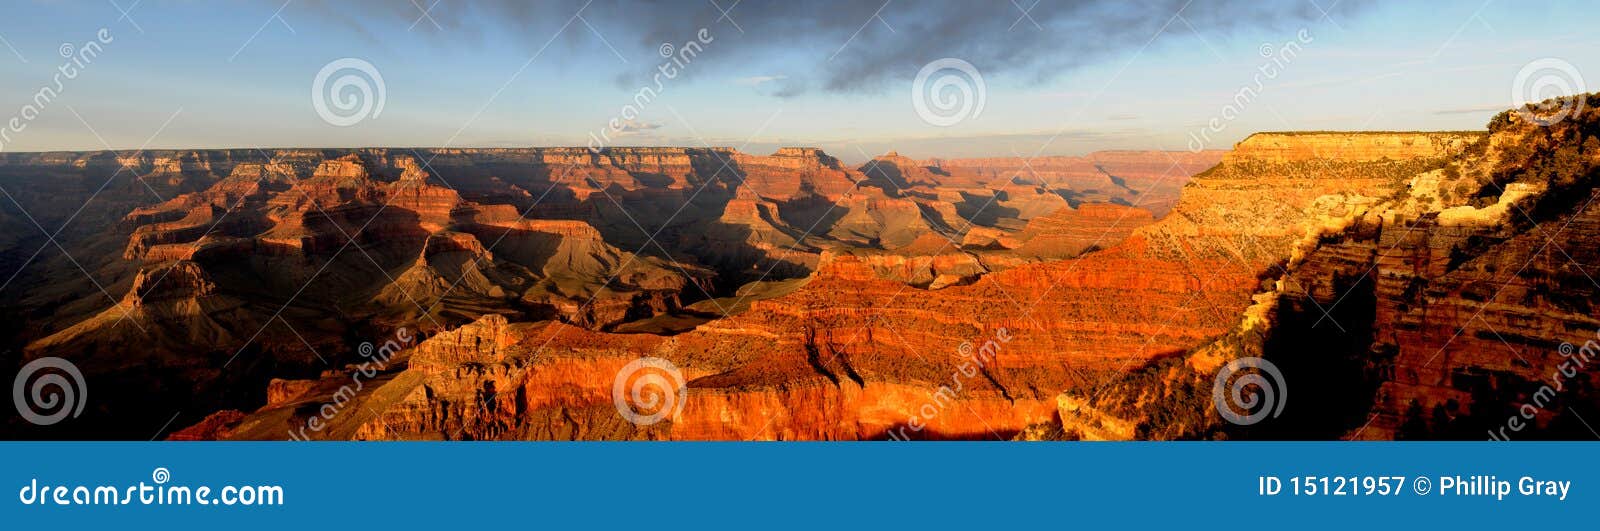 grand canyon sunset panorama